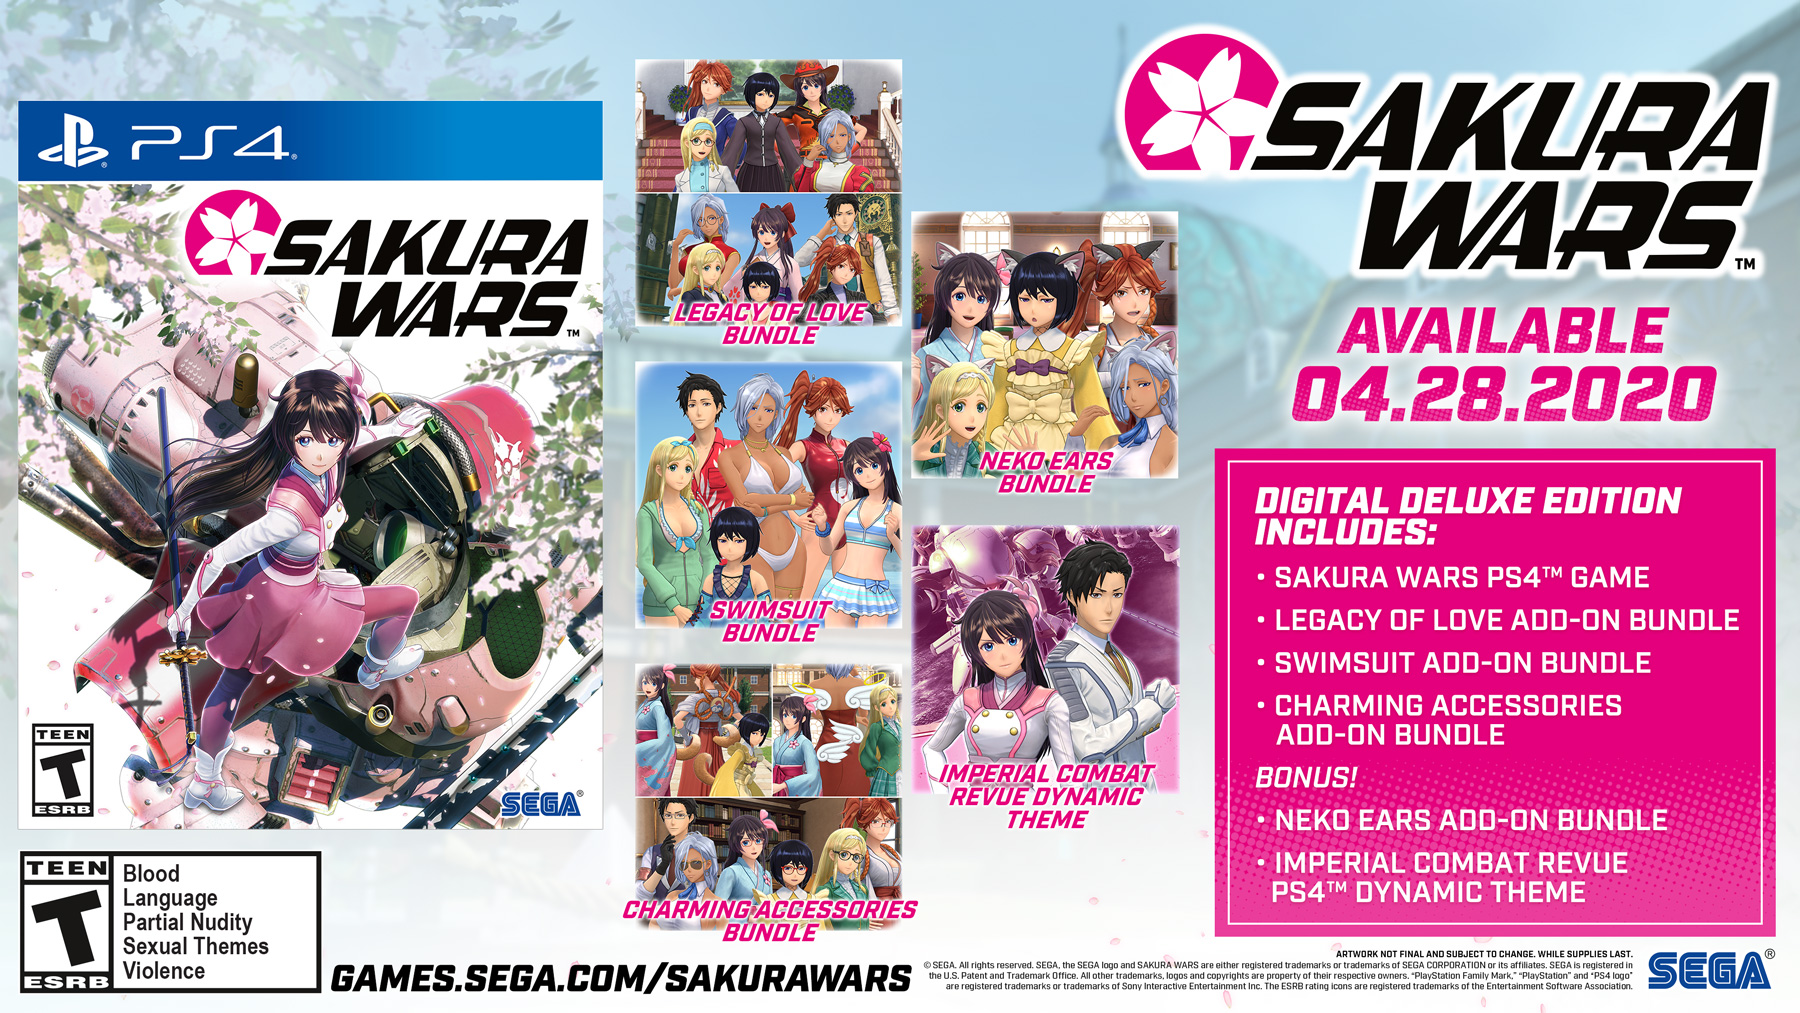 Sakura wars - digital deluxe edition